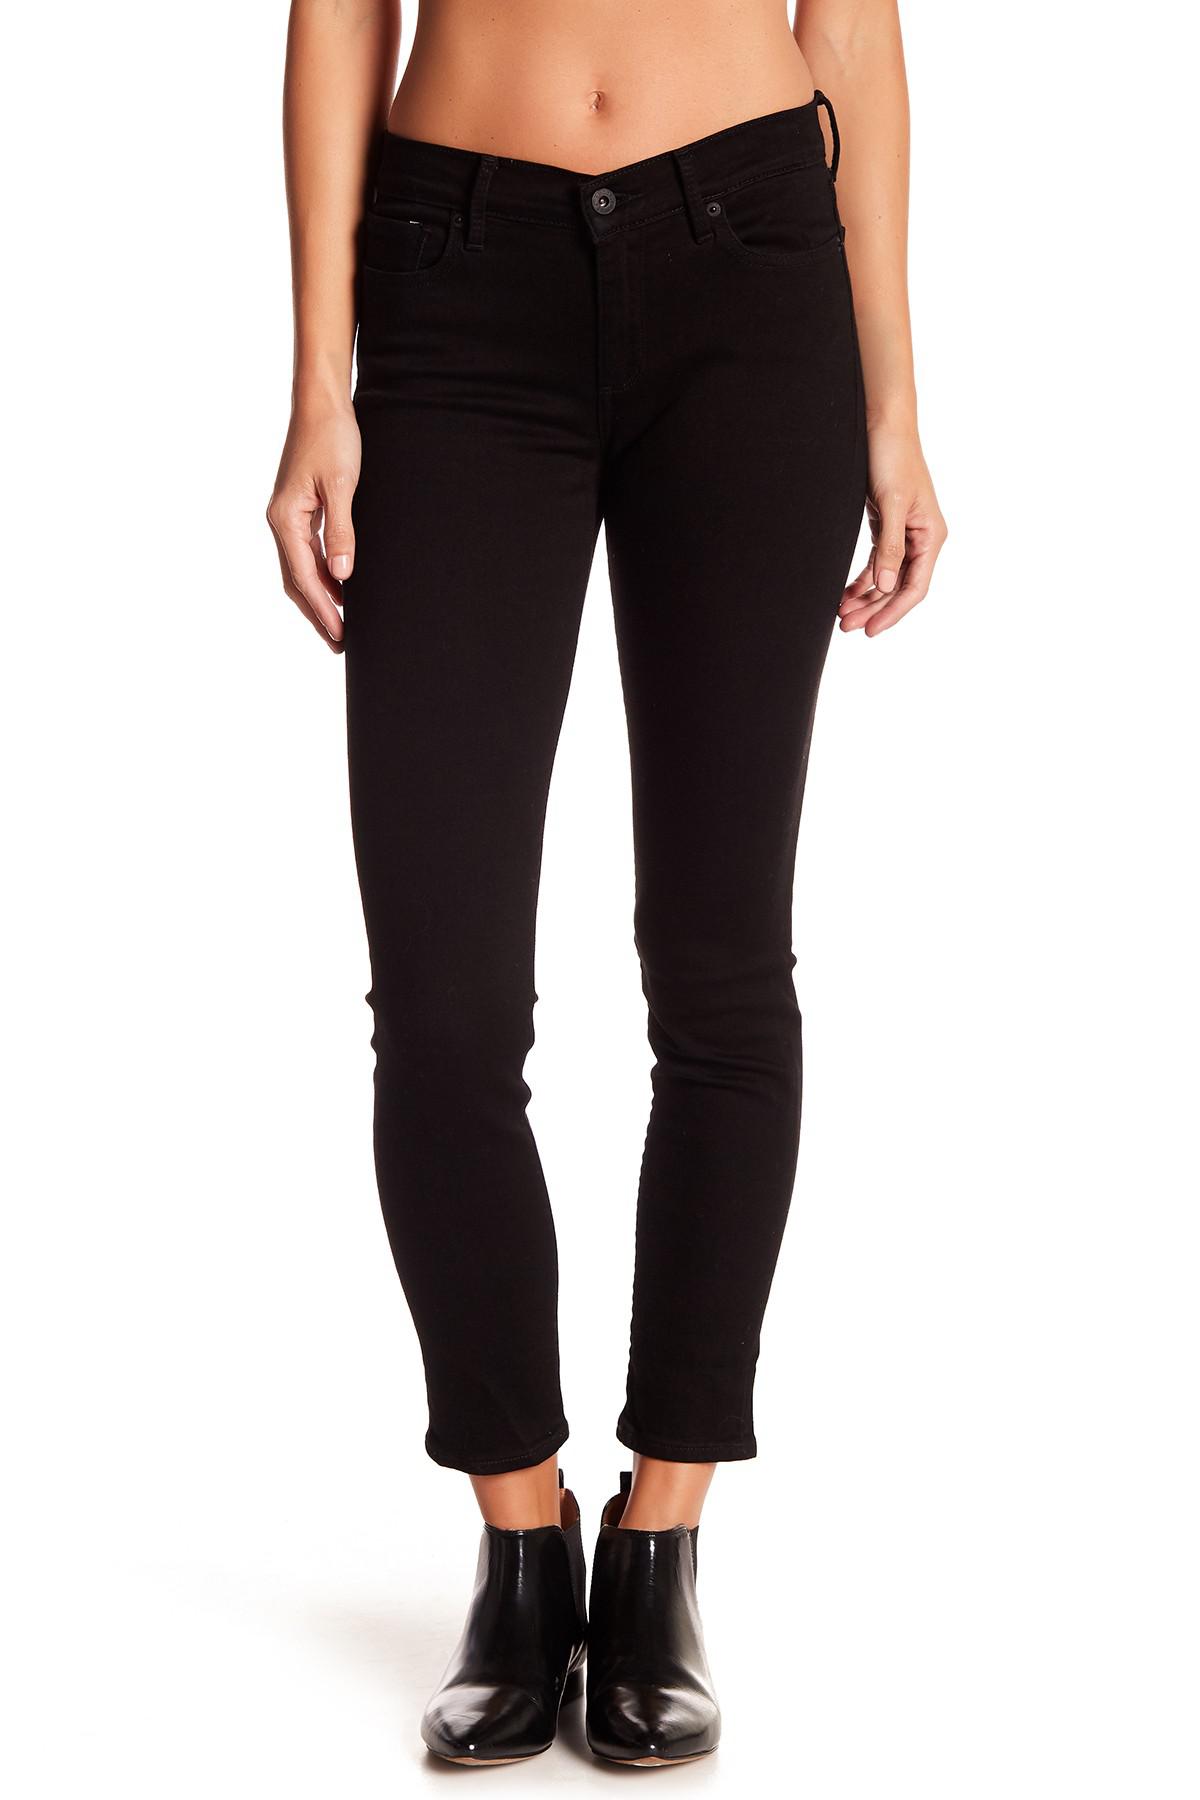 Lyst - Lucky Brand Brooke Legging Jeans in Black